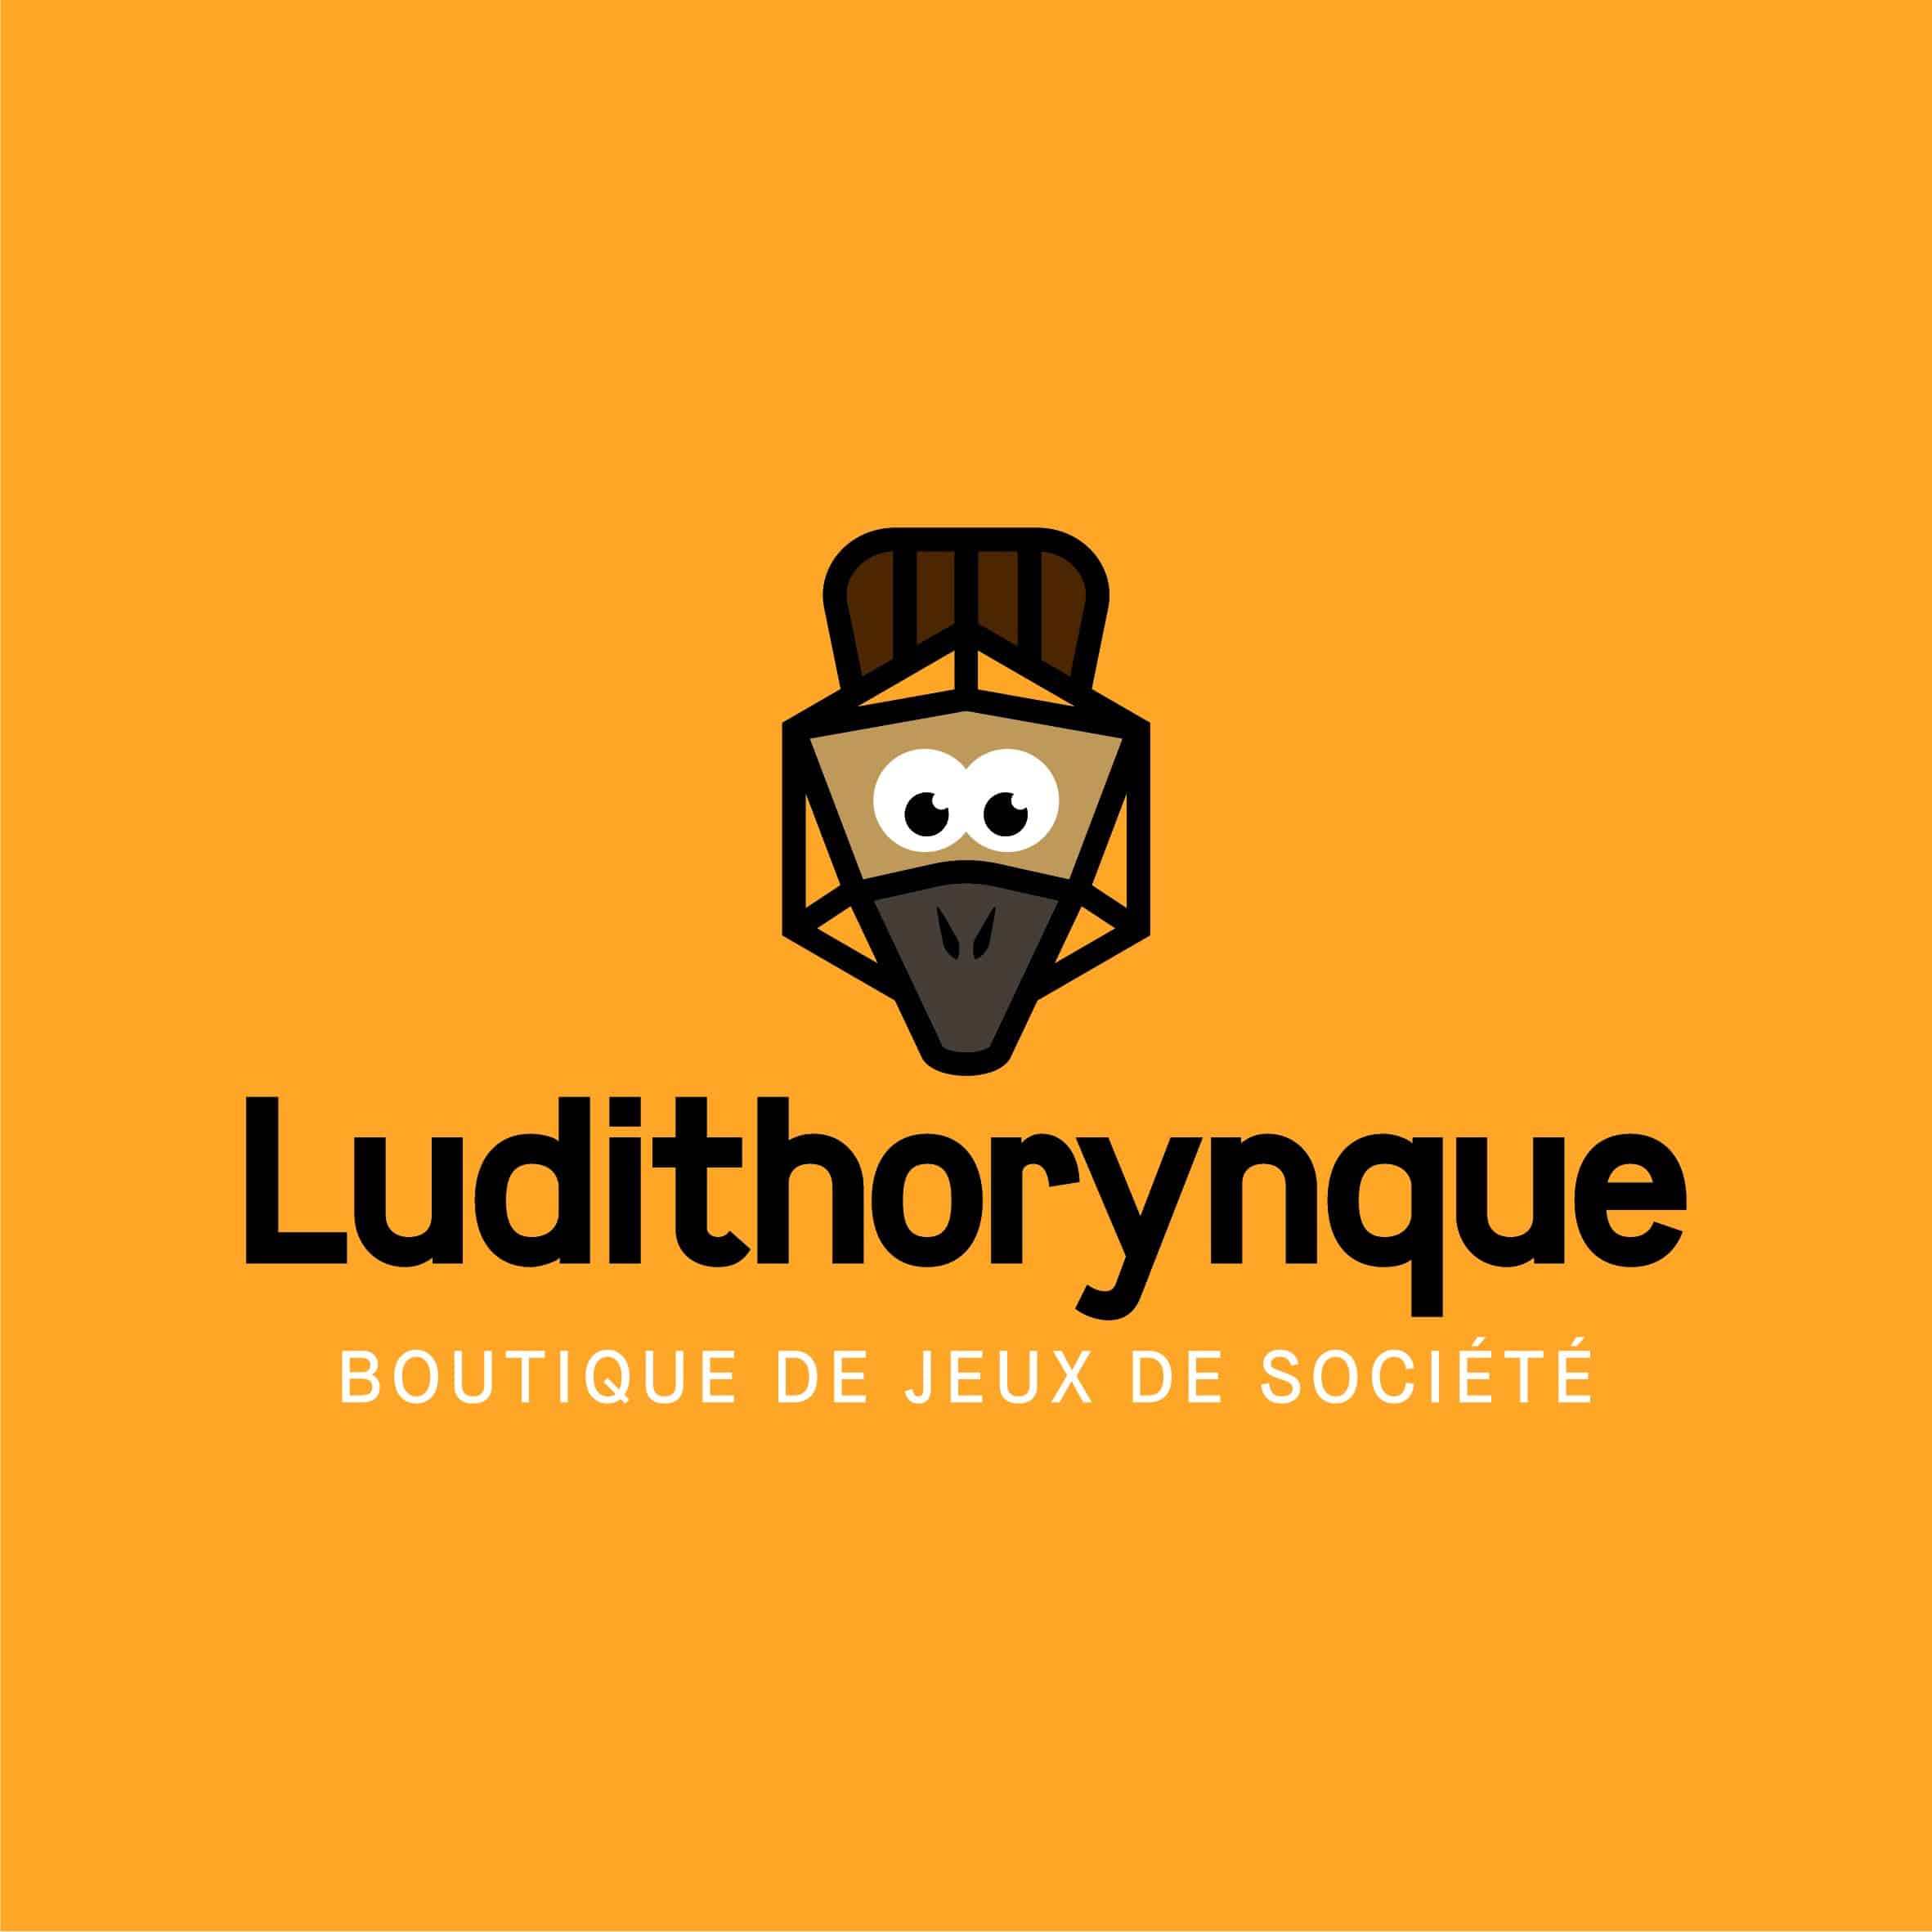 ludithorynque_logo_ludithorynque-3